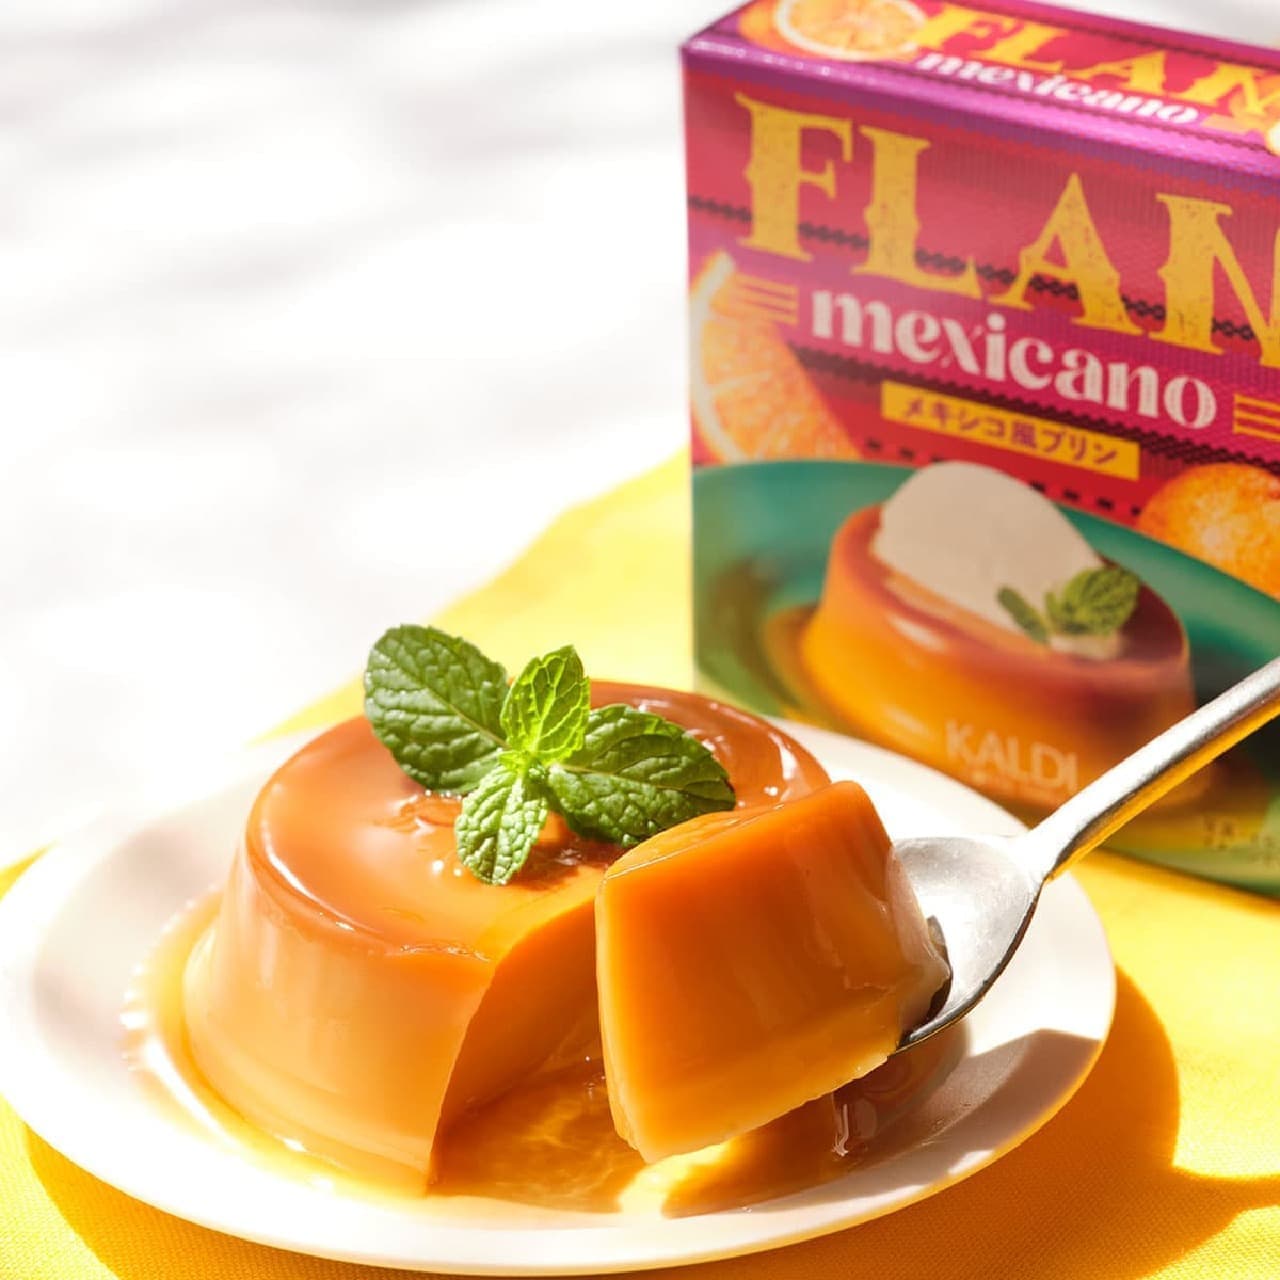 KALDI's "Original Flan Mexicano Mexican-Style Pudding"